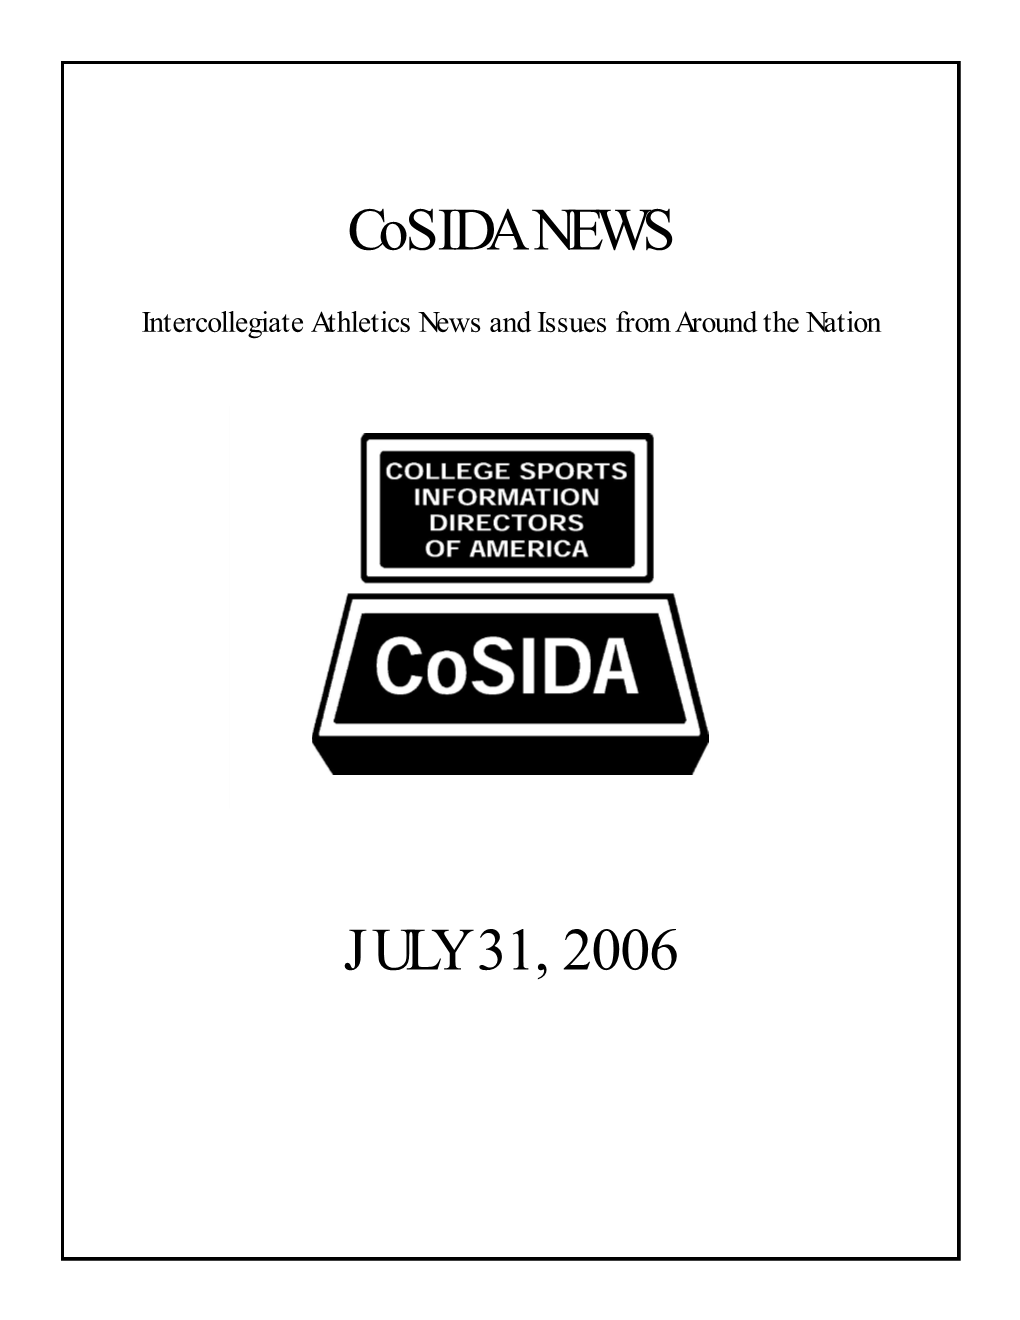 Cosida NEWS JULY 31, 2006